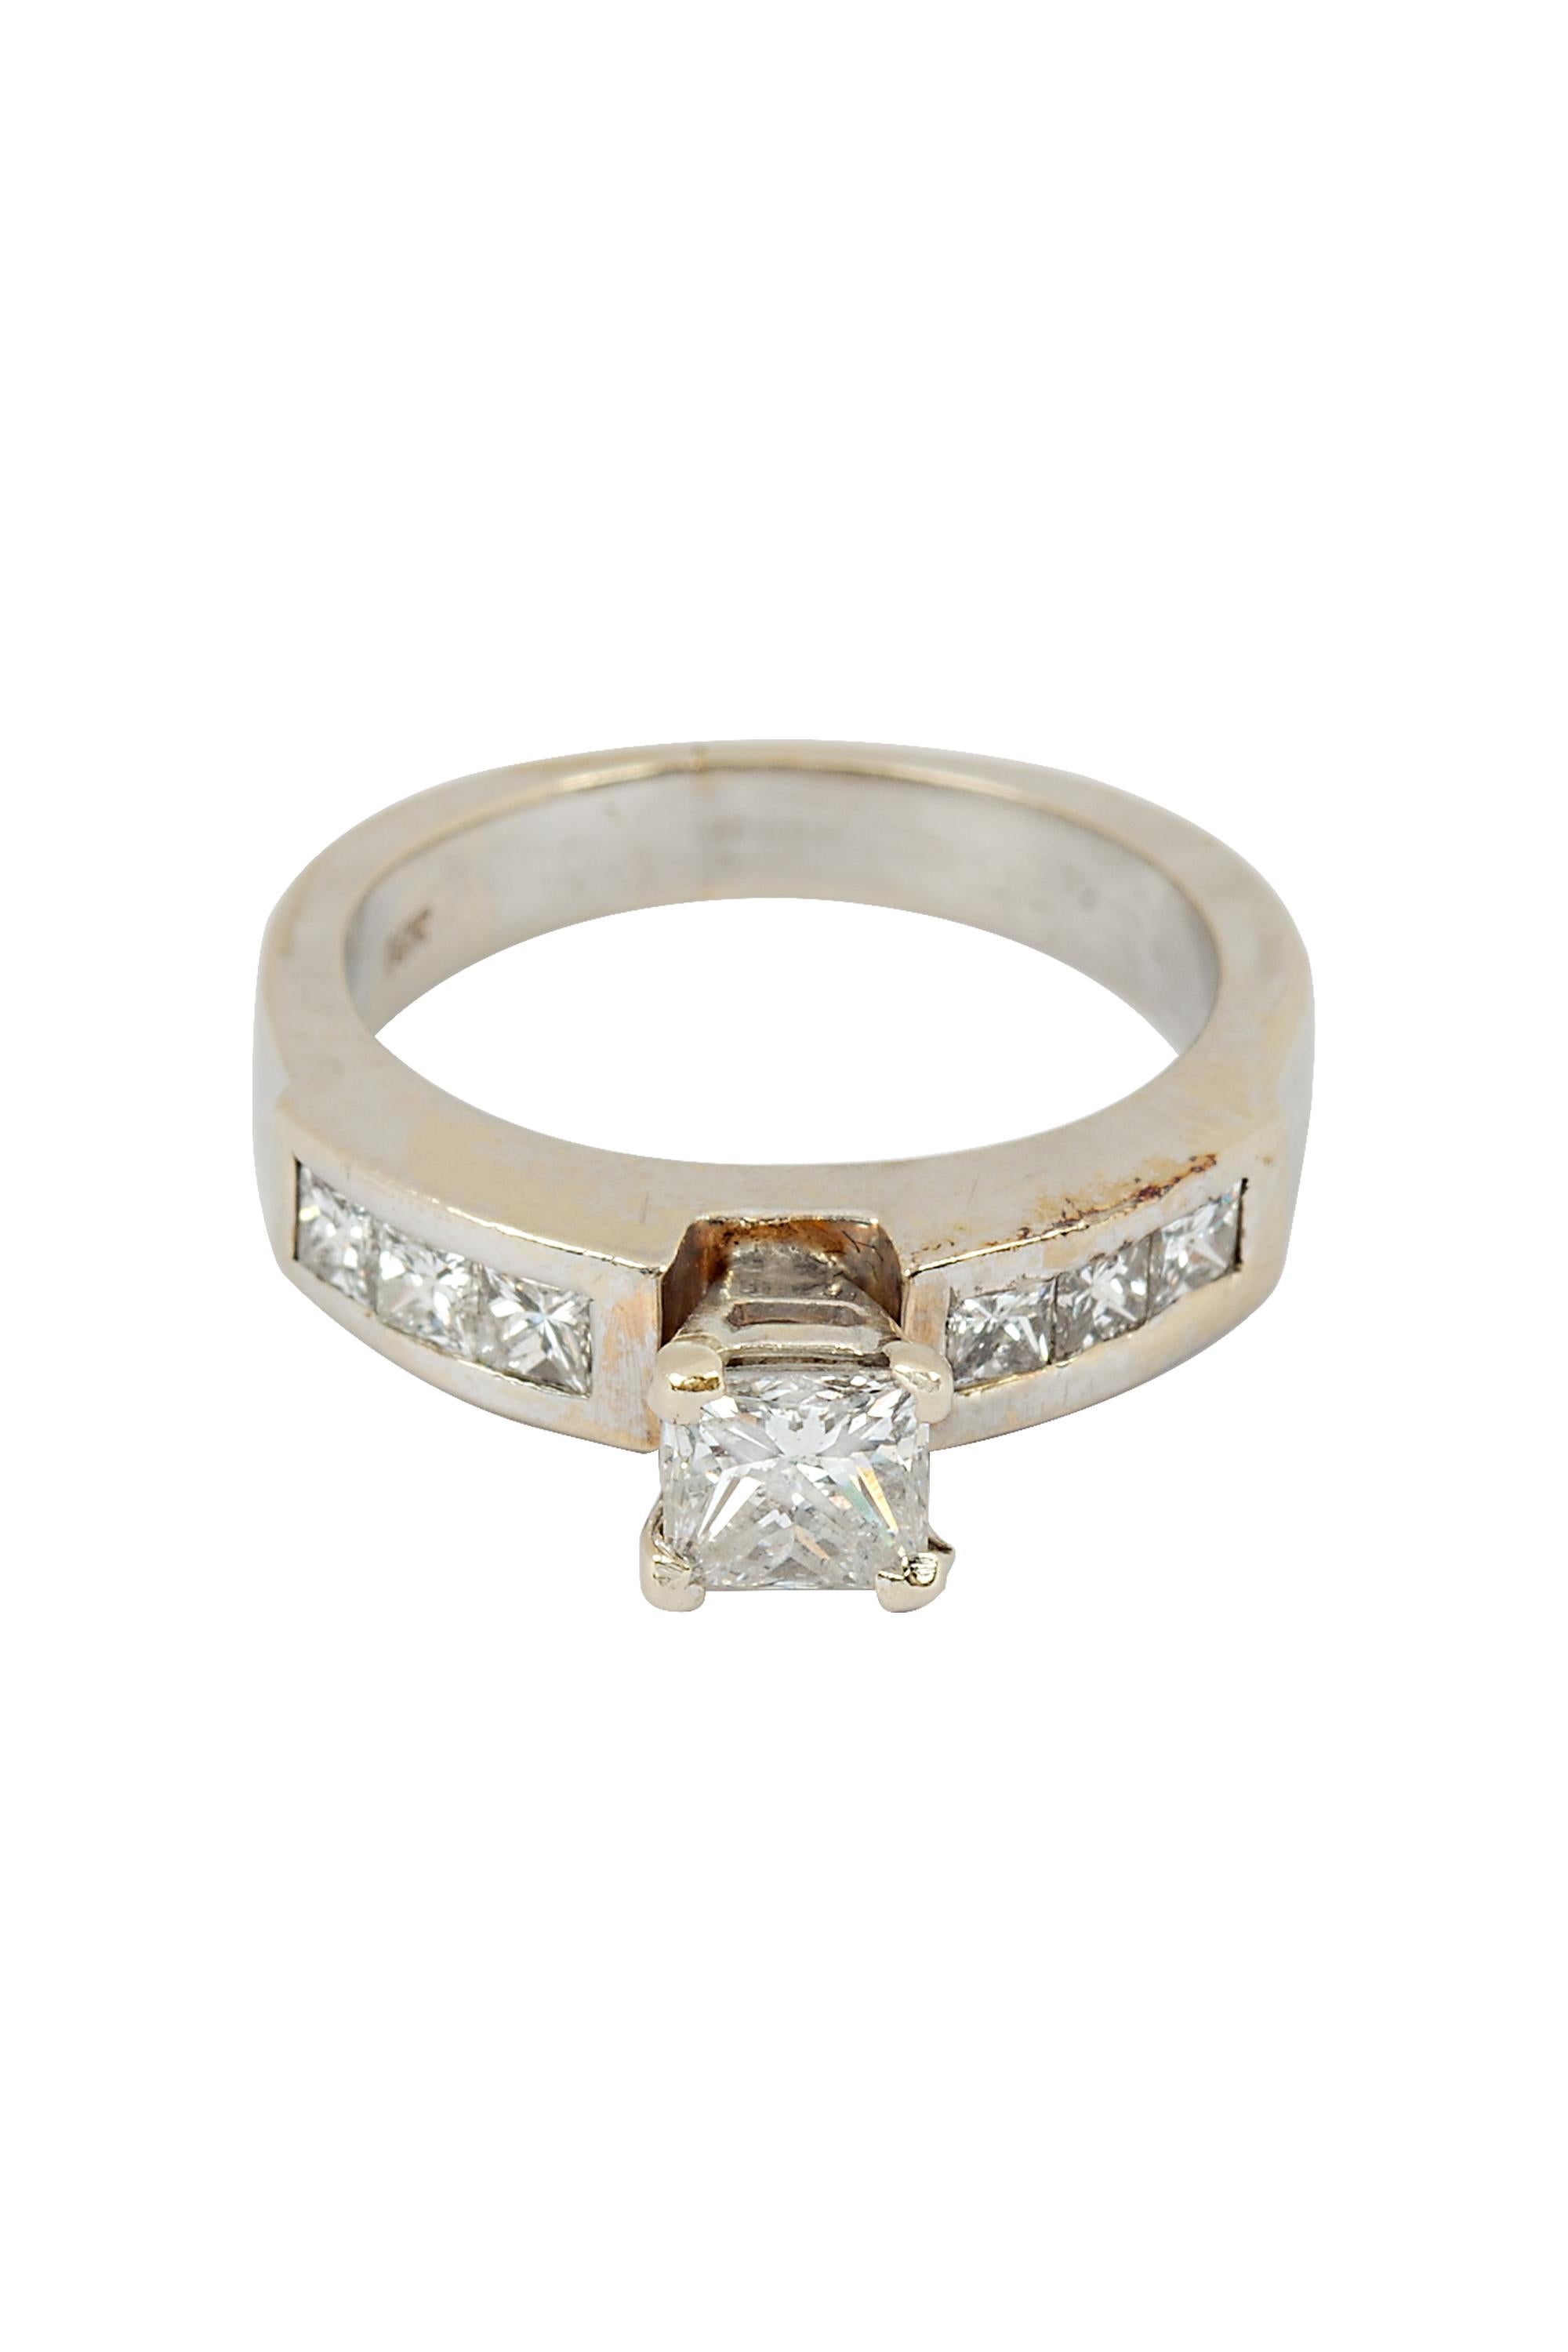 Women's or Men's 1.25 Cttw. Princess Cut Diamond Engagement Ring 14k White Gold For Sale